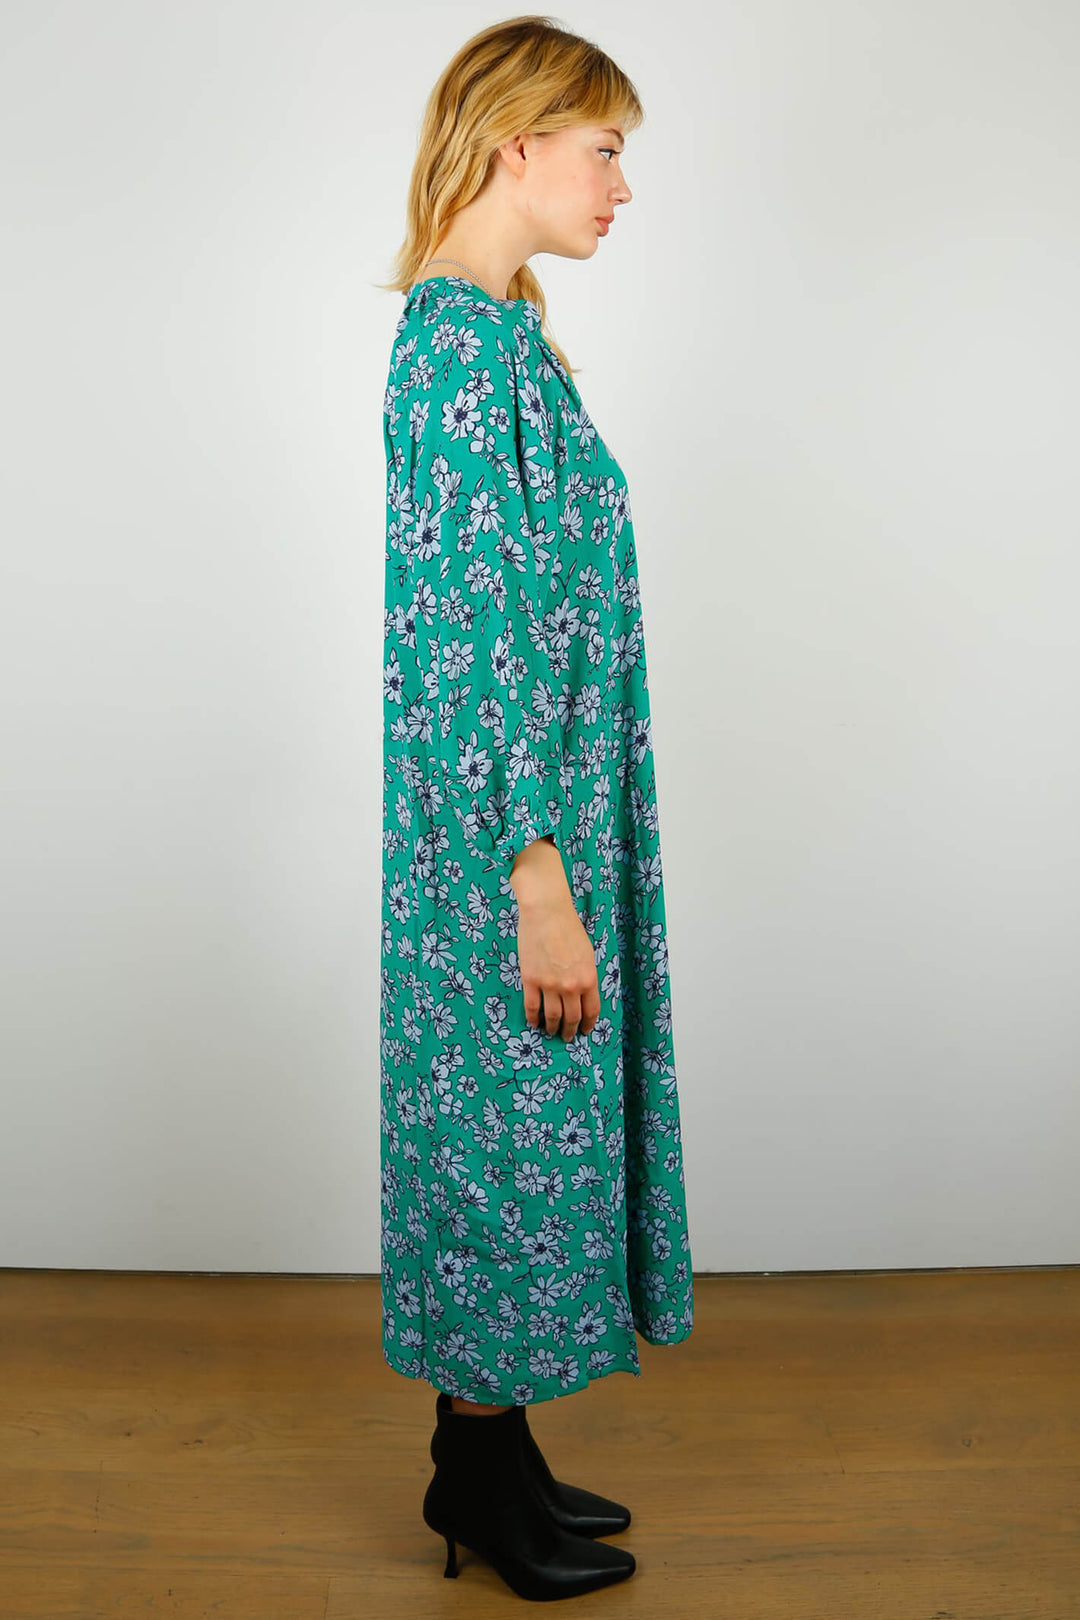 Primrose Park Zion Green Sketch Floral 01 Print Midi Dress - Shirley Allum Boutique